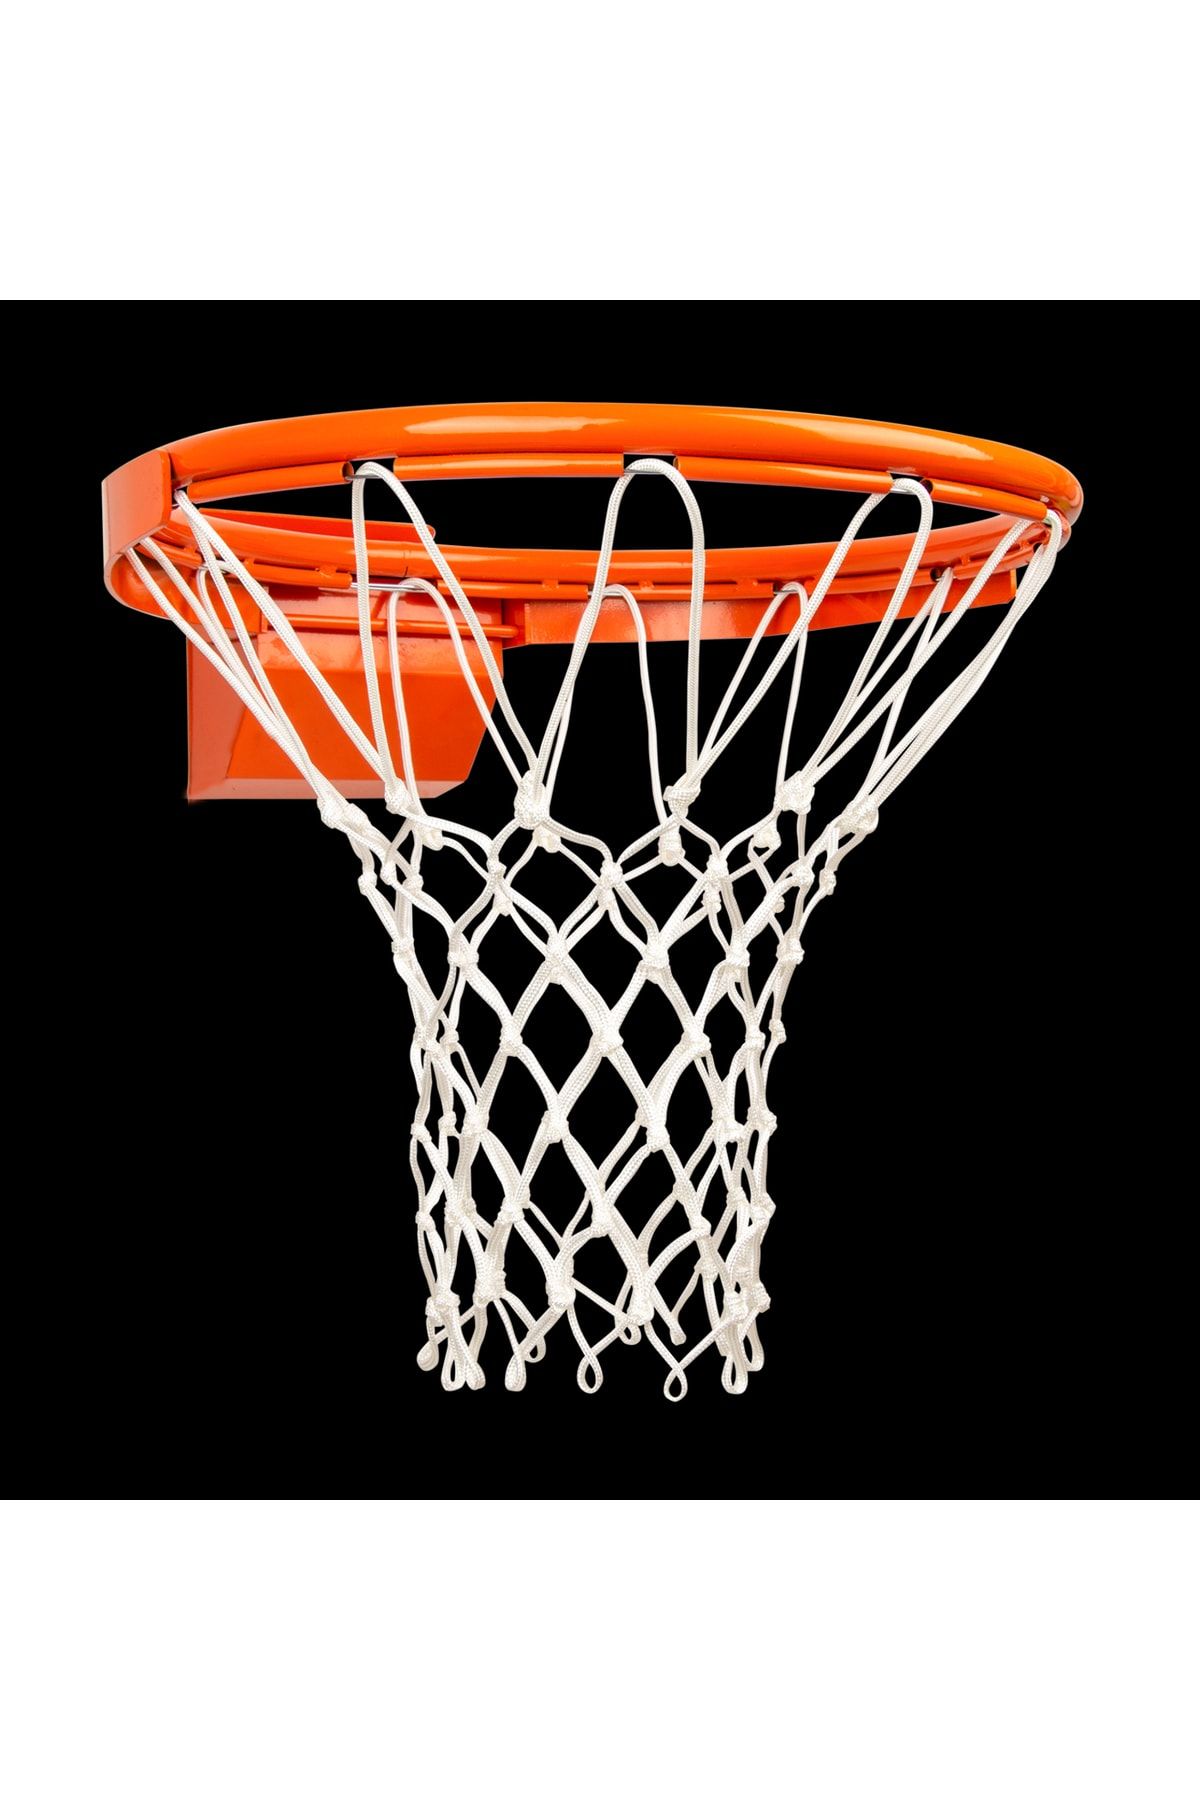 Nodes Basketbol Pota Filesi - Nba Model - Profesyonel